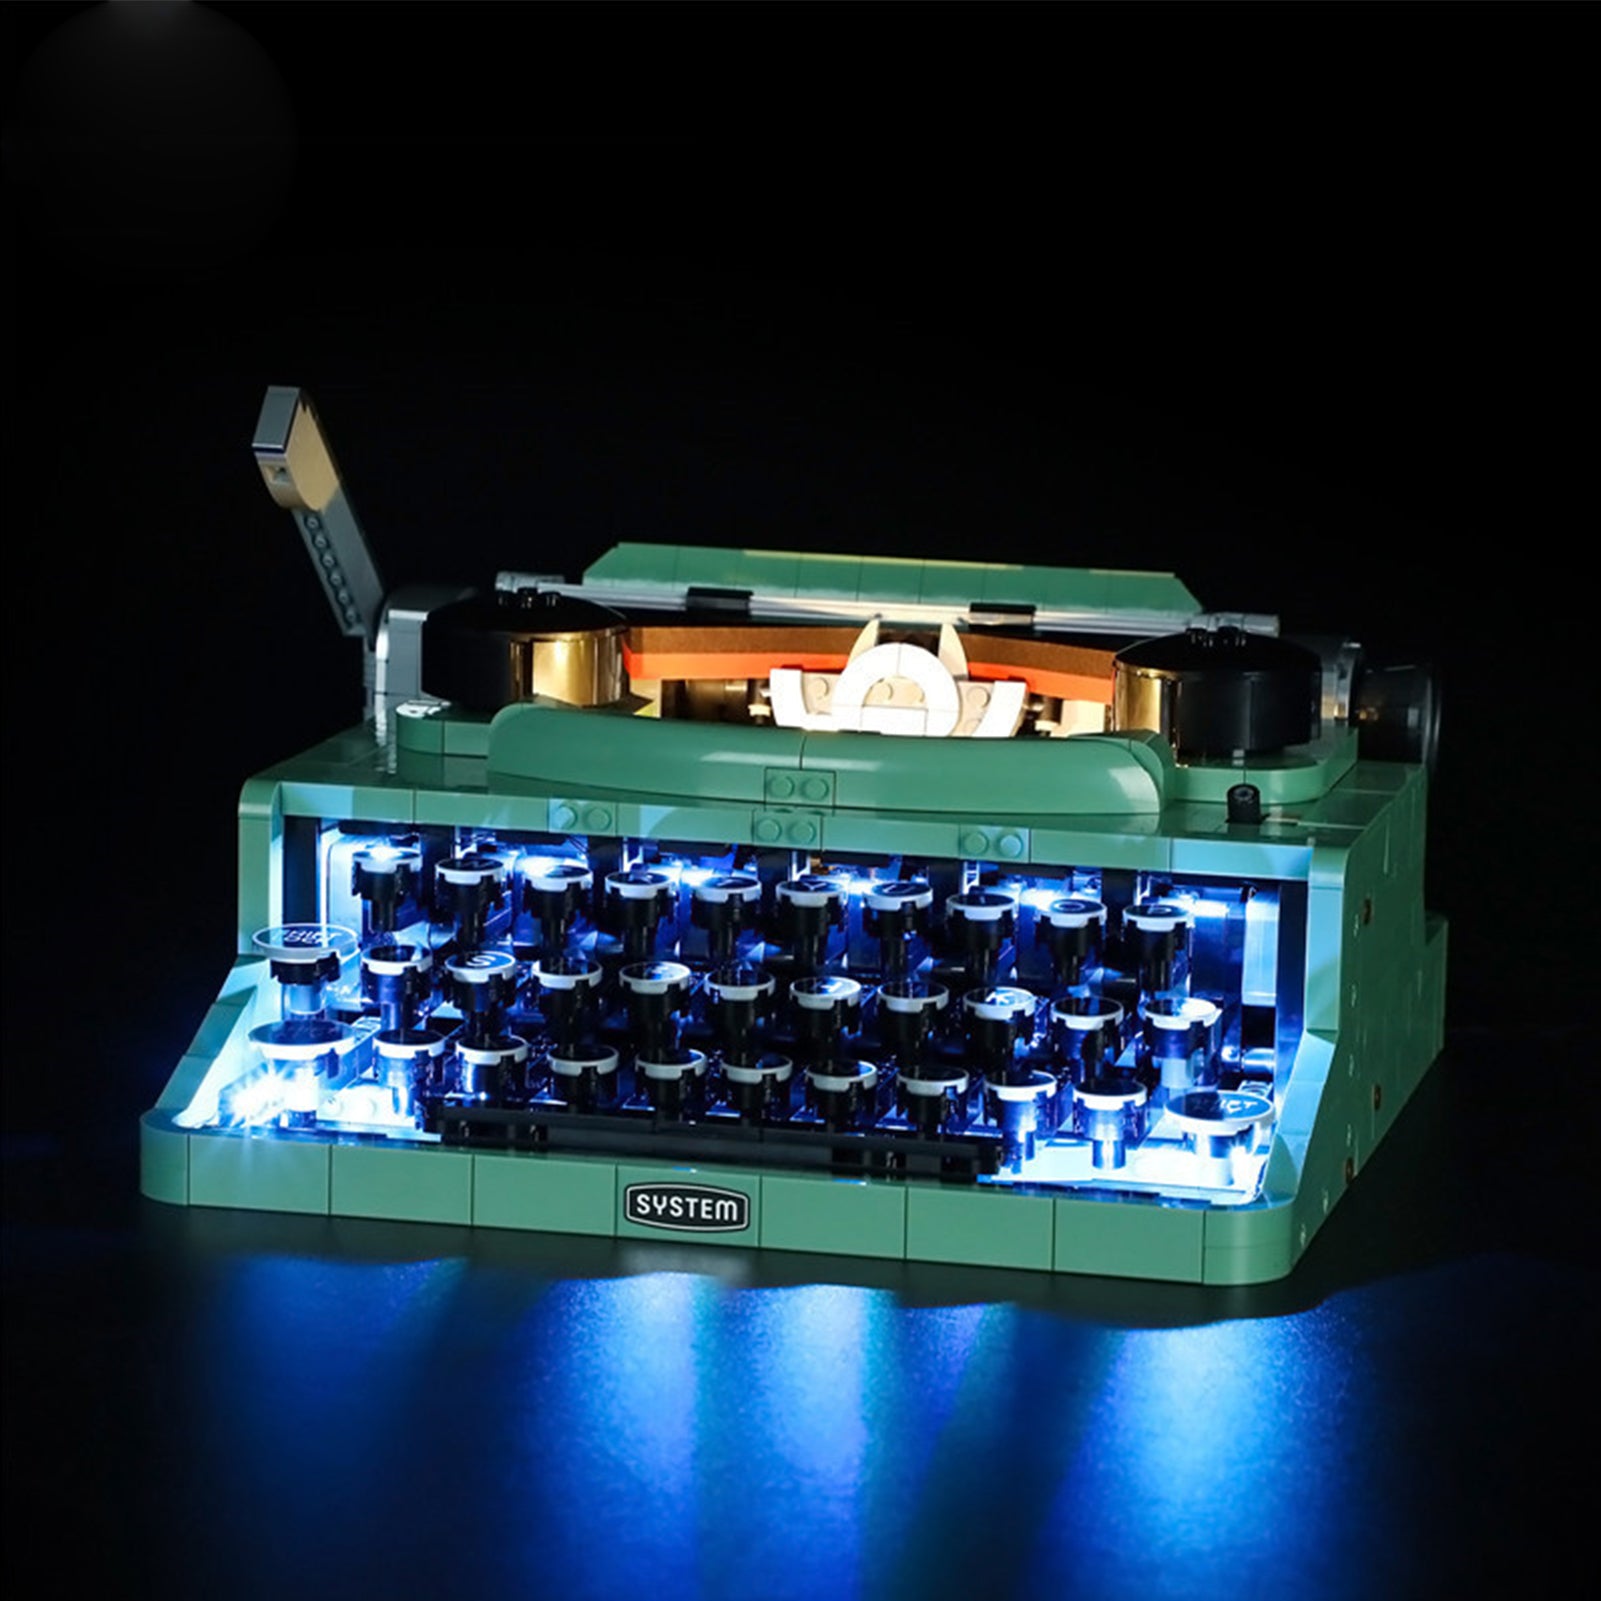 Light kit for Lego Ideas 21327 Typewriter